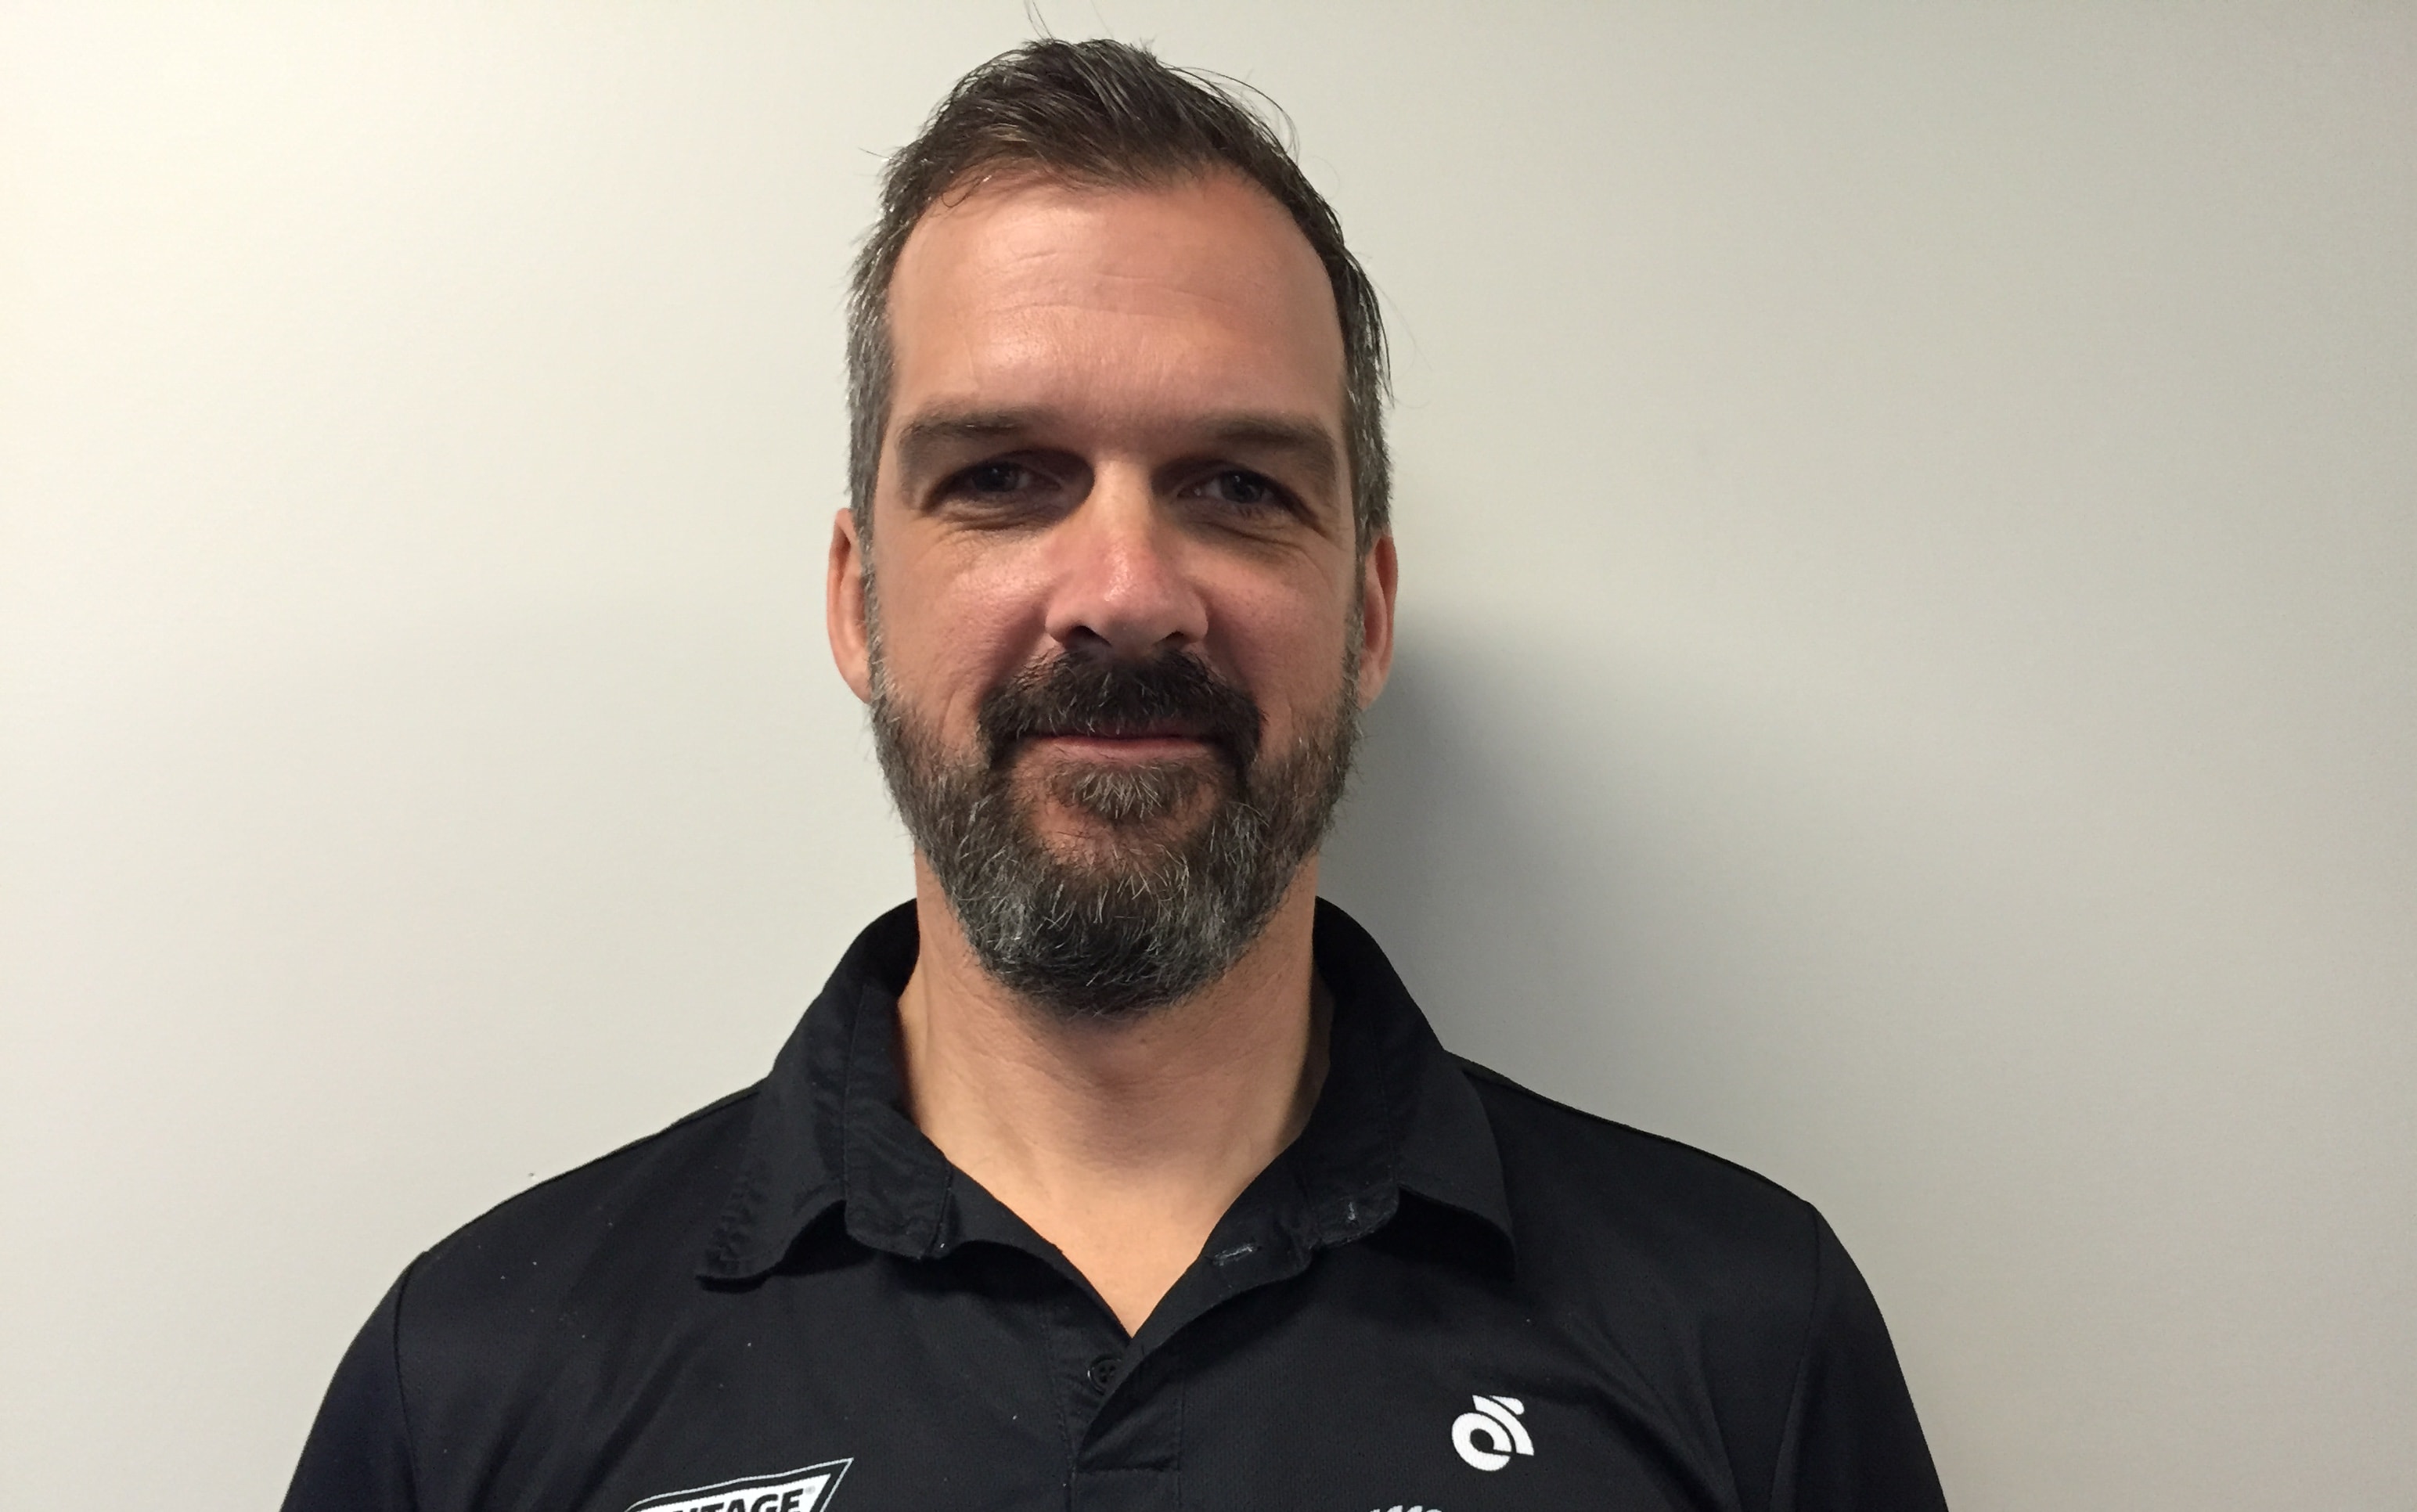 Cycling New Zealand interim CEO Jacques Landry